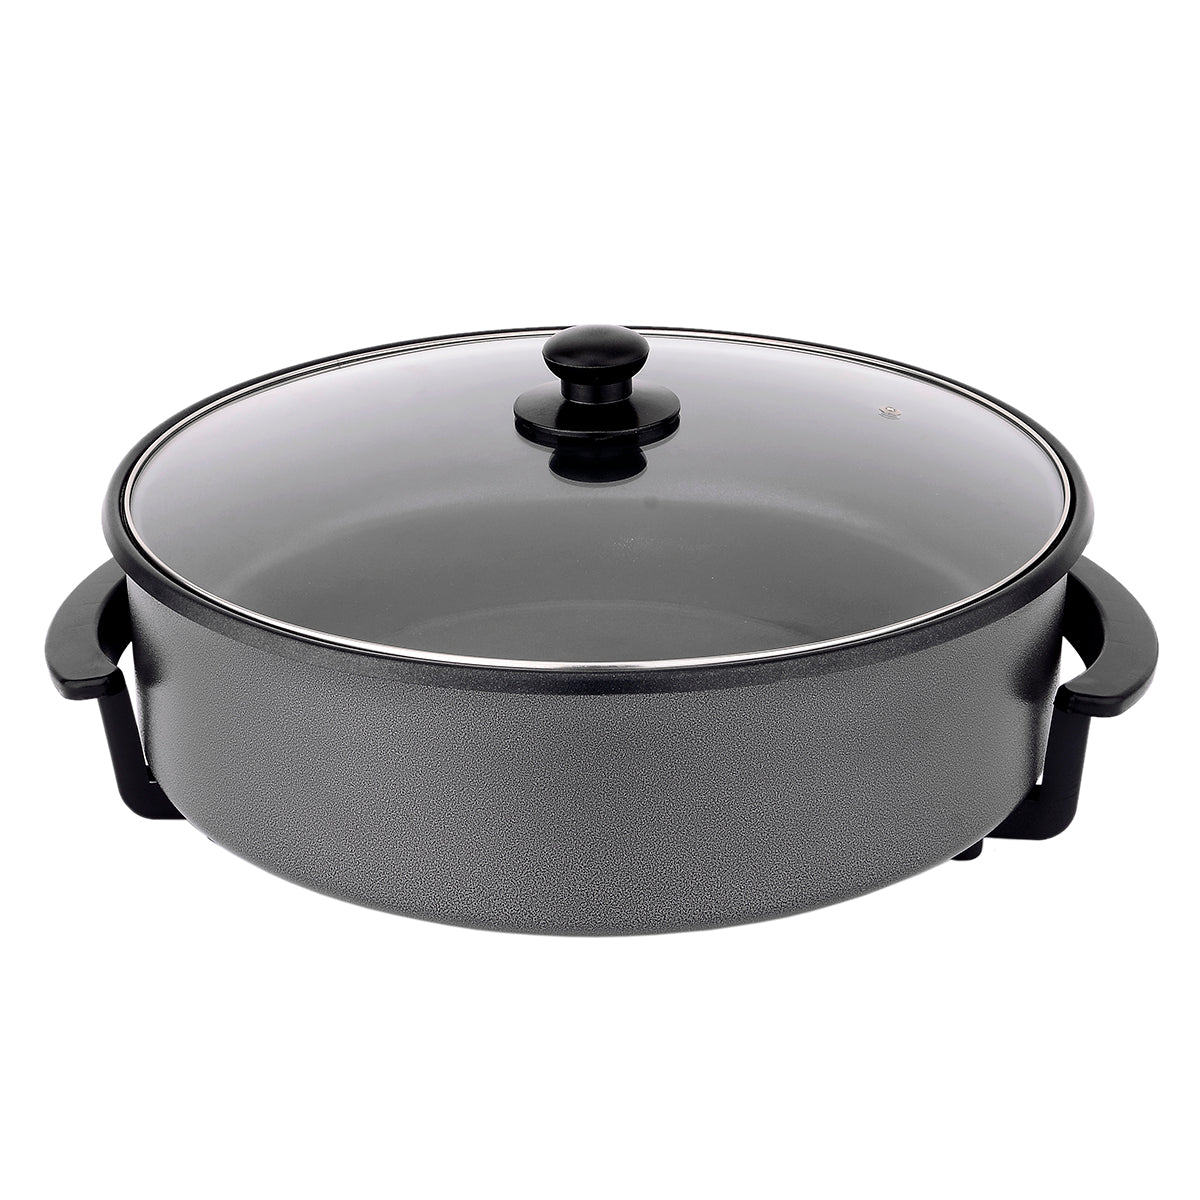 Non-Stick Electric Fry Pan (Dark Grey) 38cm Diameter, 240°C Max